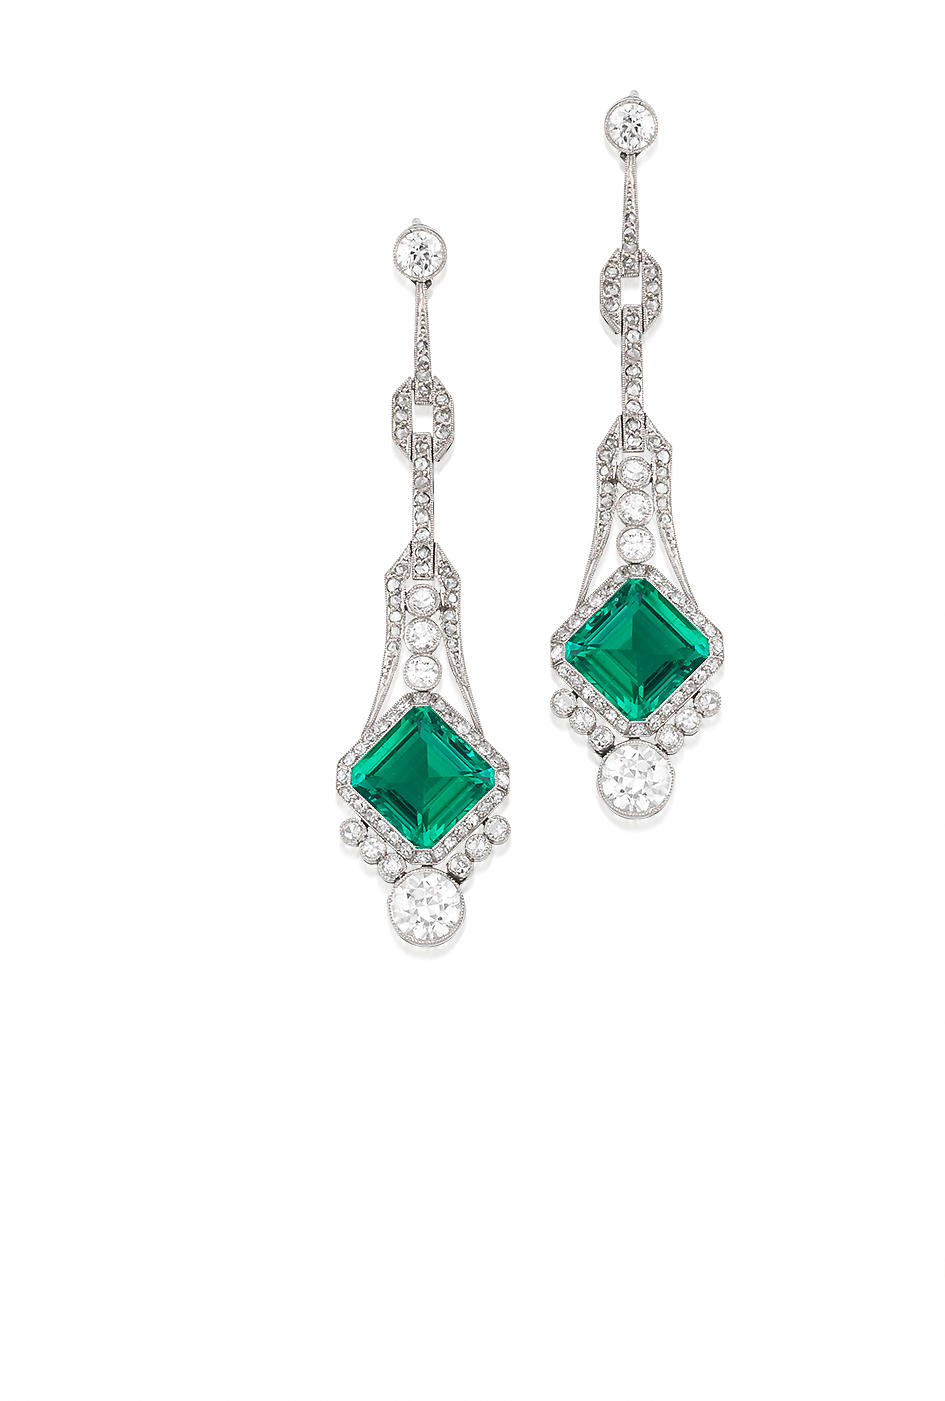 Bonhams : An Early 20th Century Pair of Fine Emerald and Diamond ...